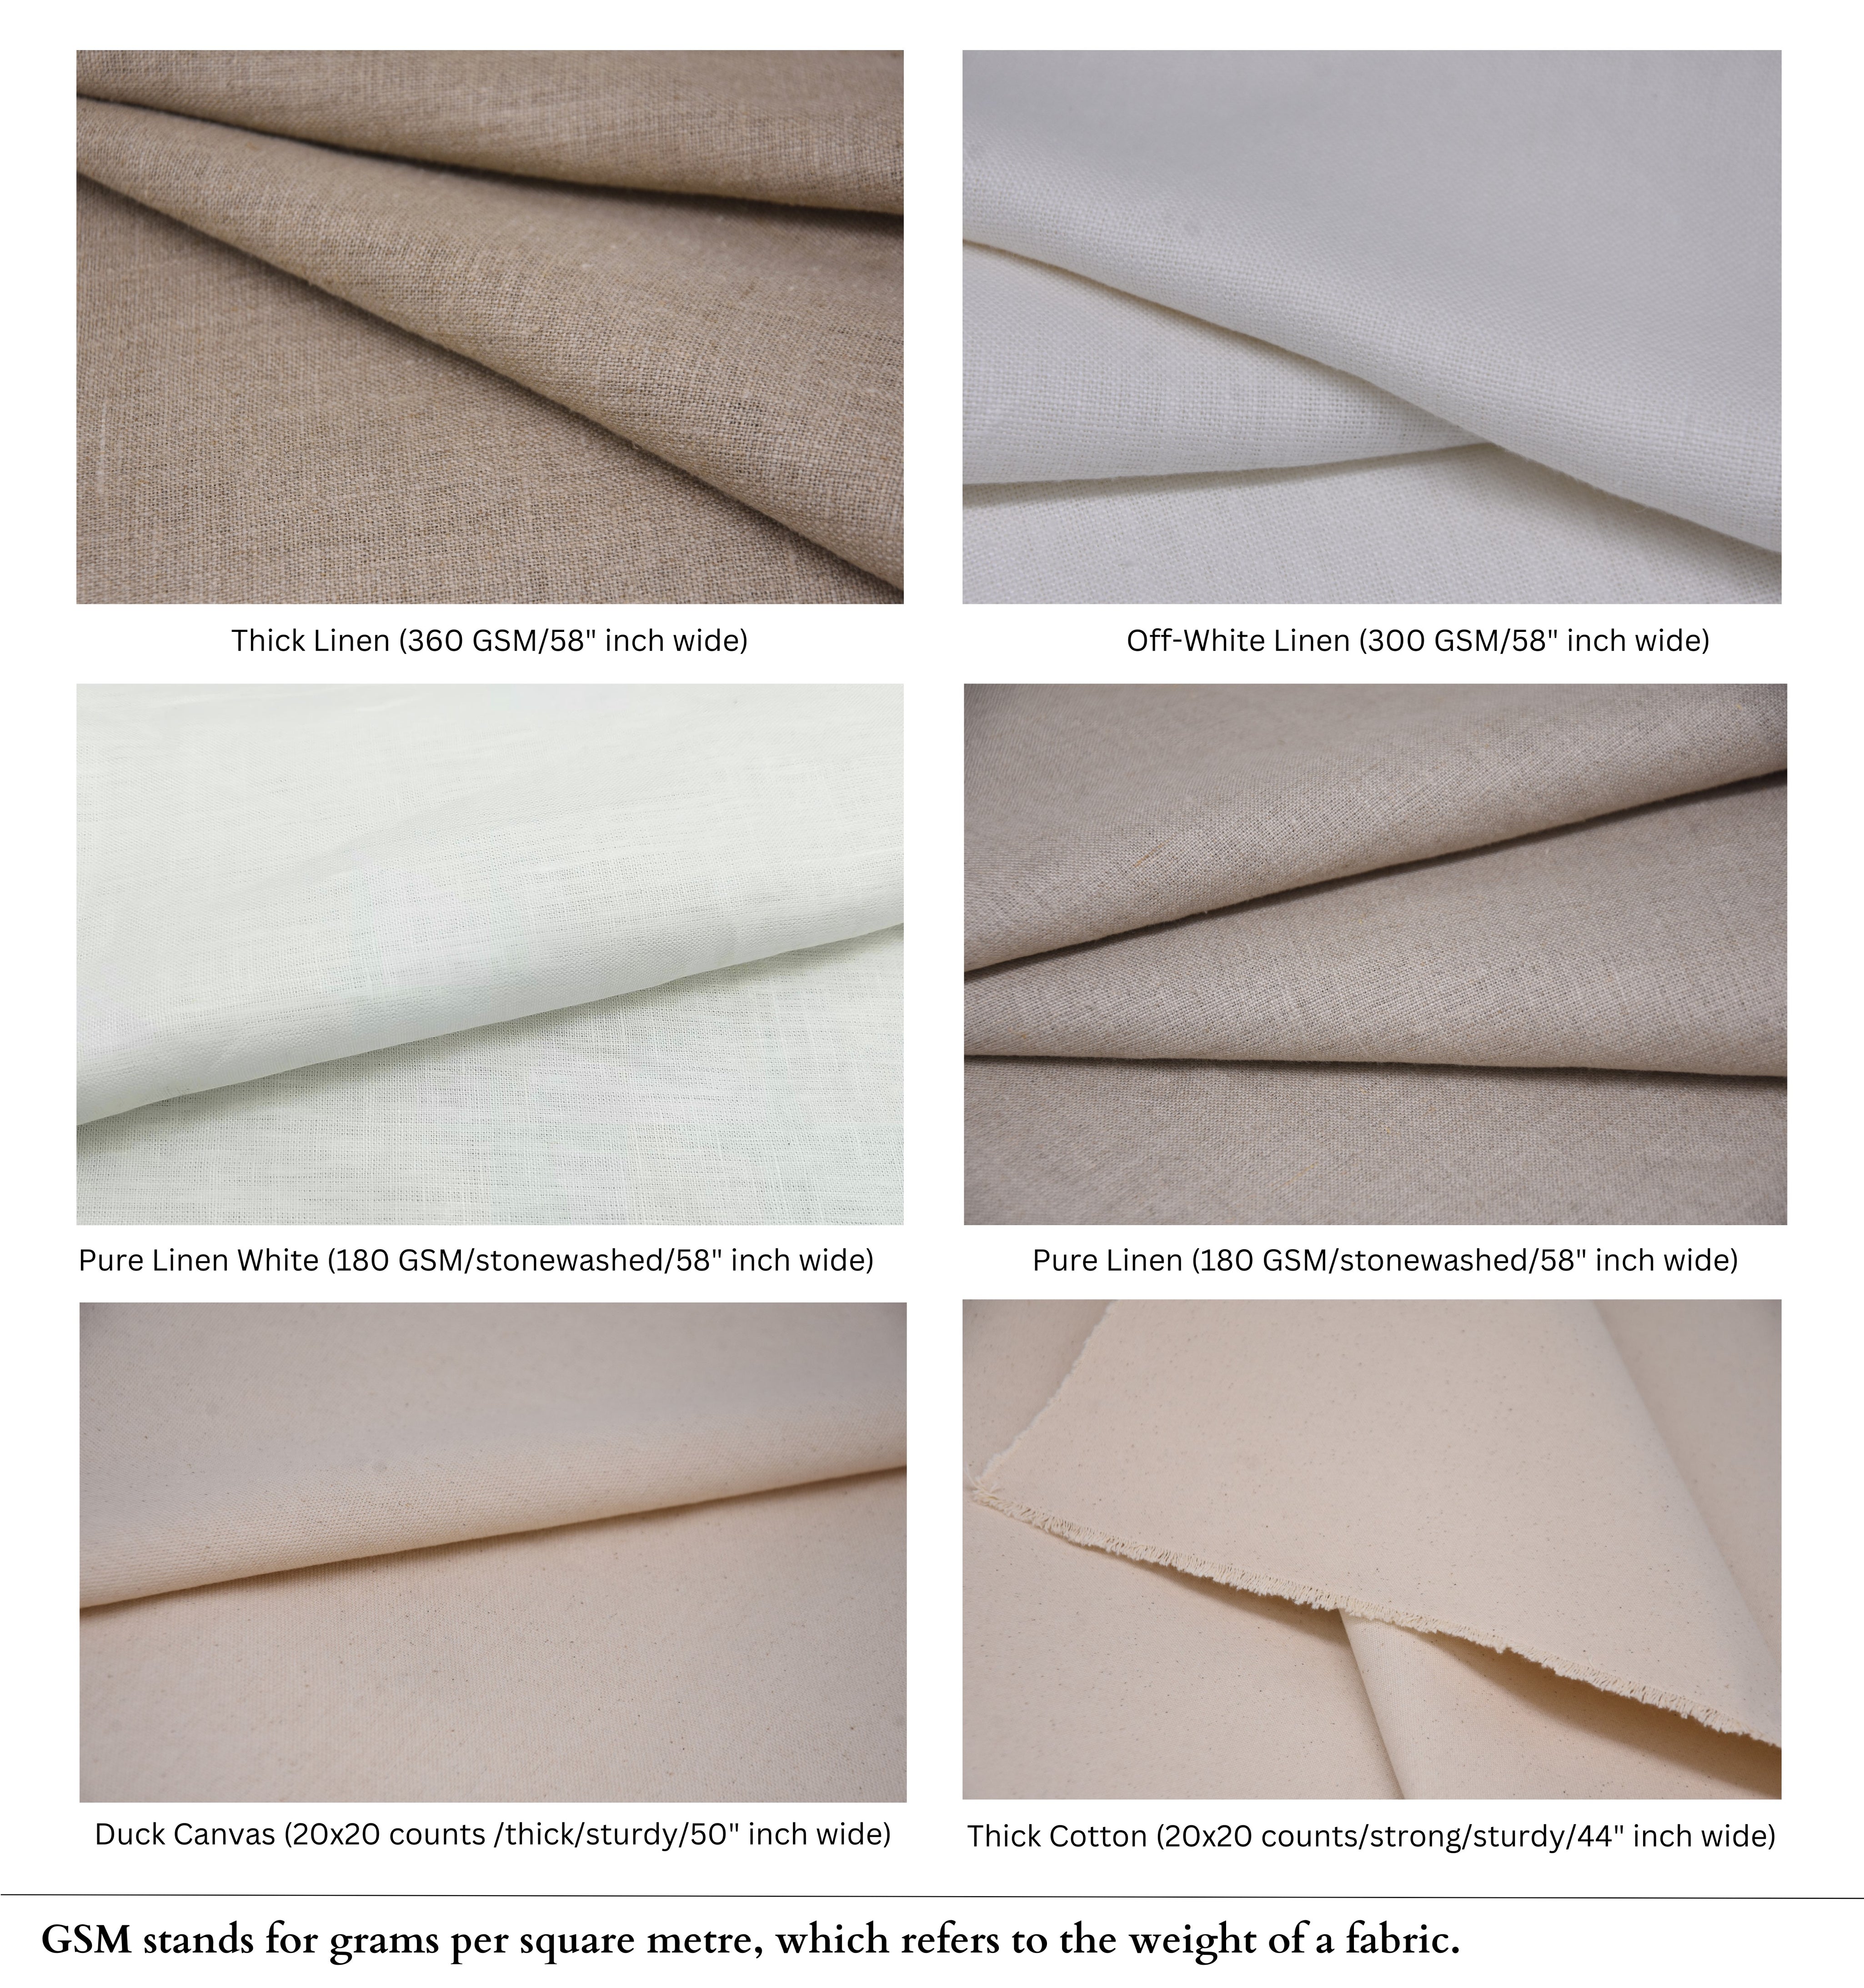 Block Print Linen Fabric, Rameshwaram  Pure Linen White Base Cushion Fabric, Khaki Pink Printed Fabric For Throw Pillow, Hand Block Printed Linen, Floral Print 